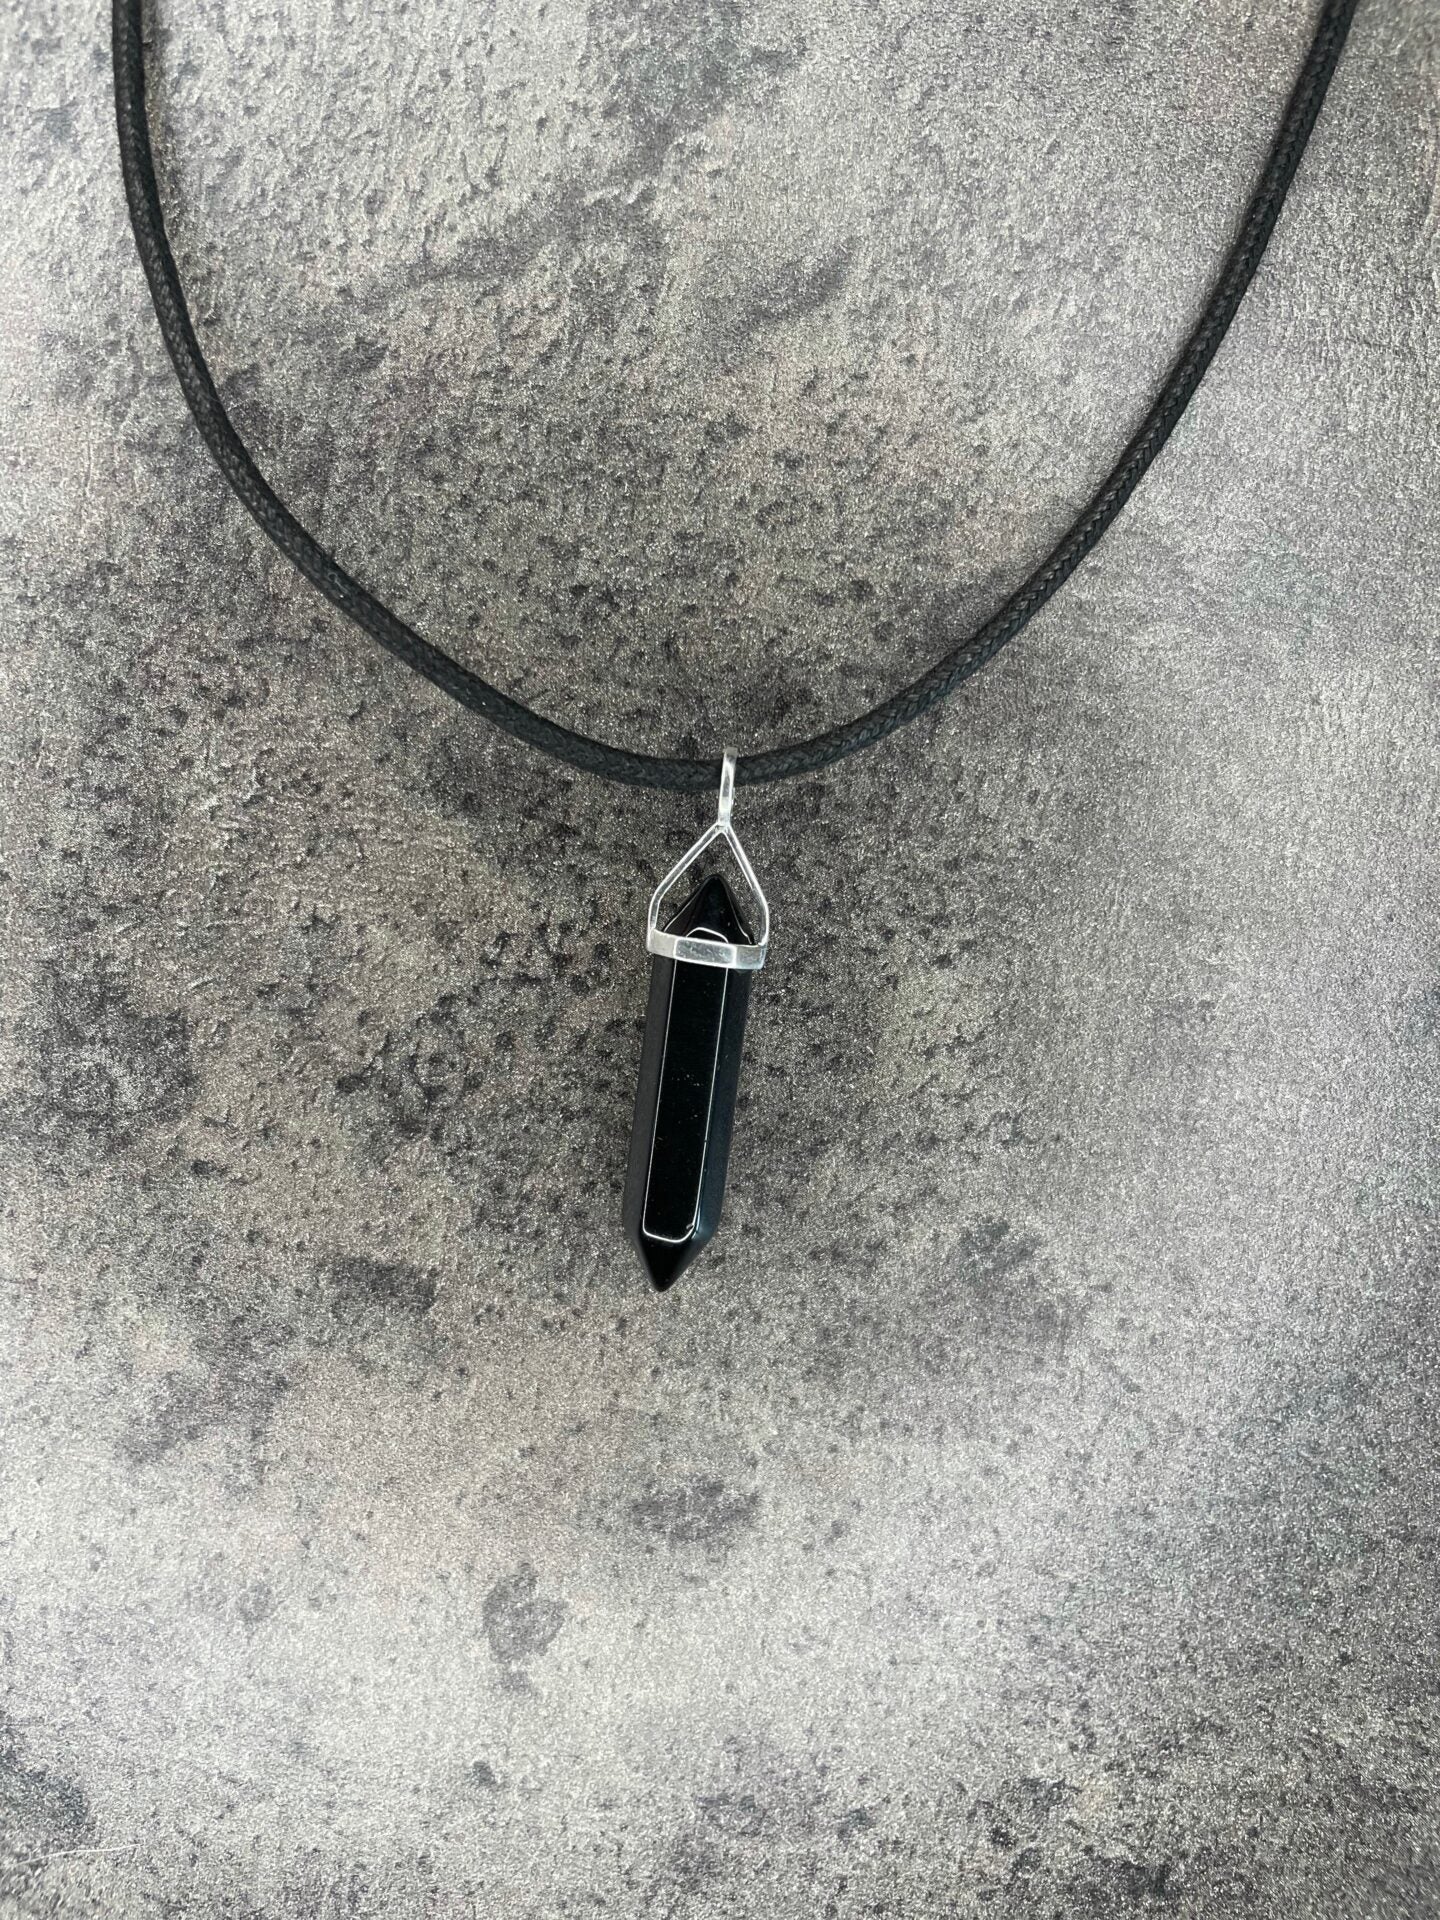 Protection pendant - Black obsidian